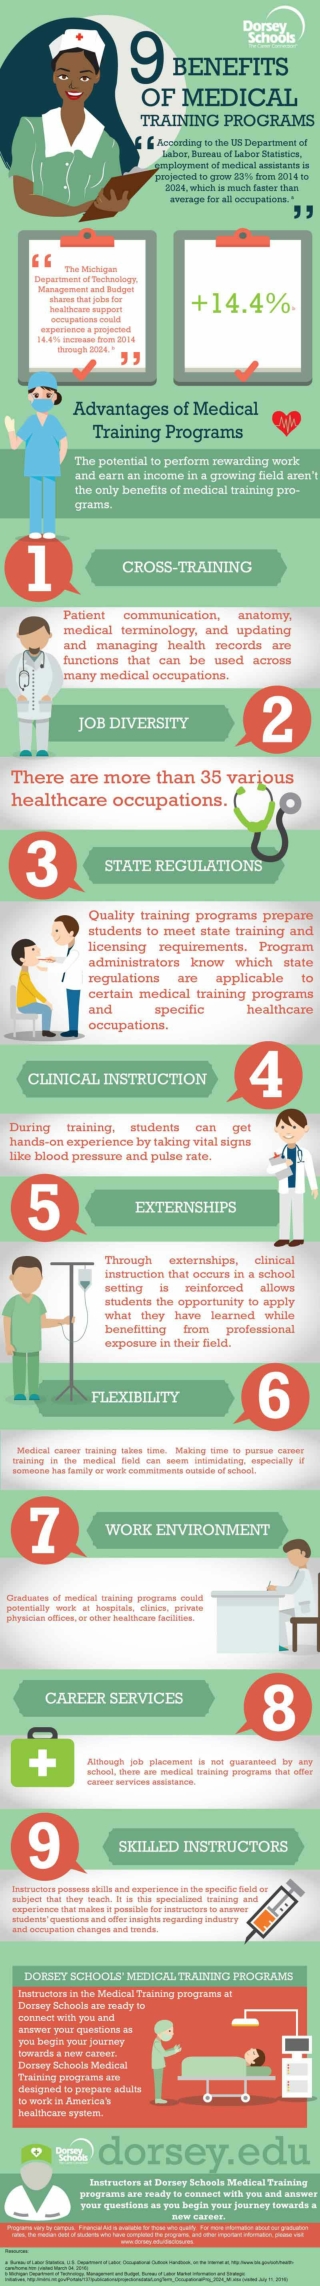 Medical training programs